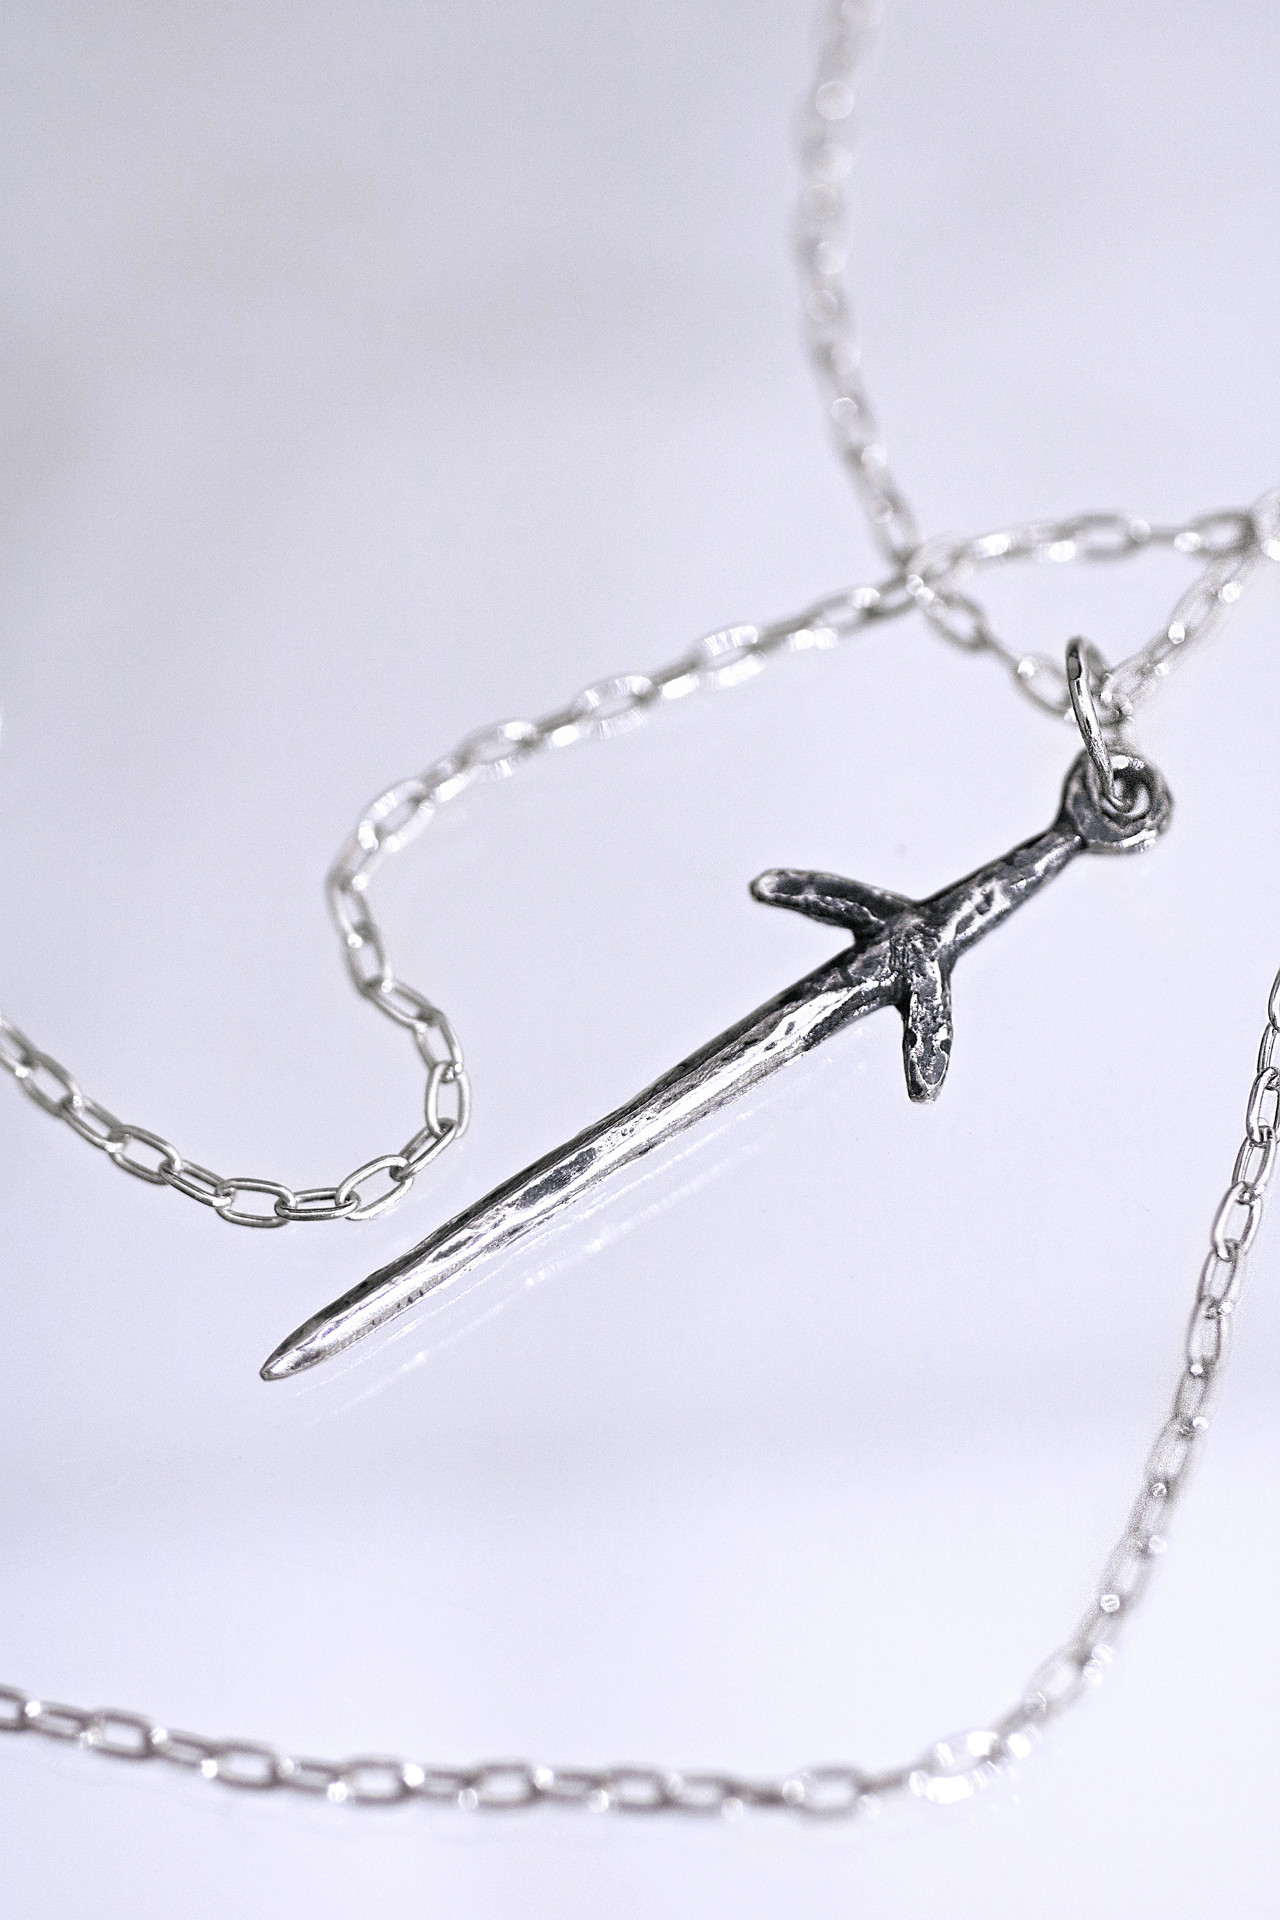 Crystal Sword Necklace - Silver Dagger